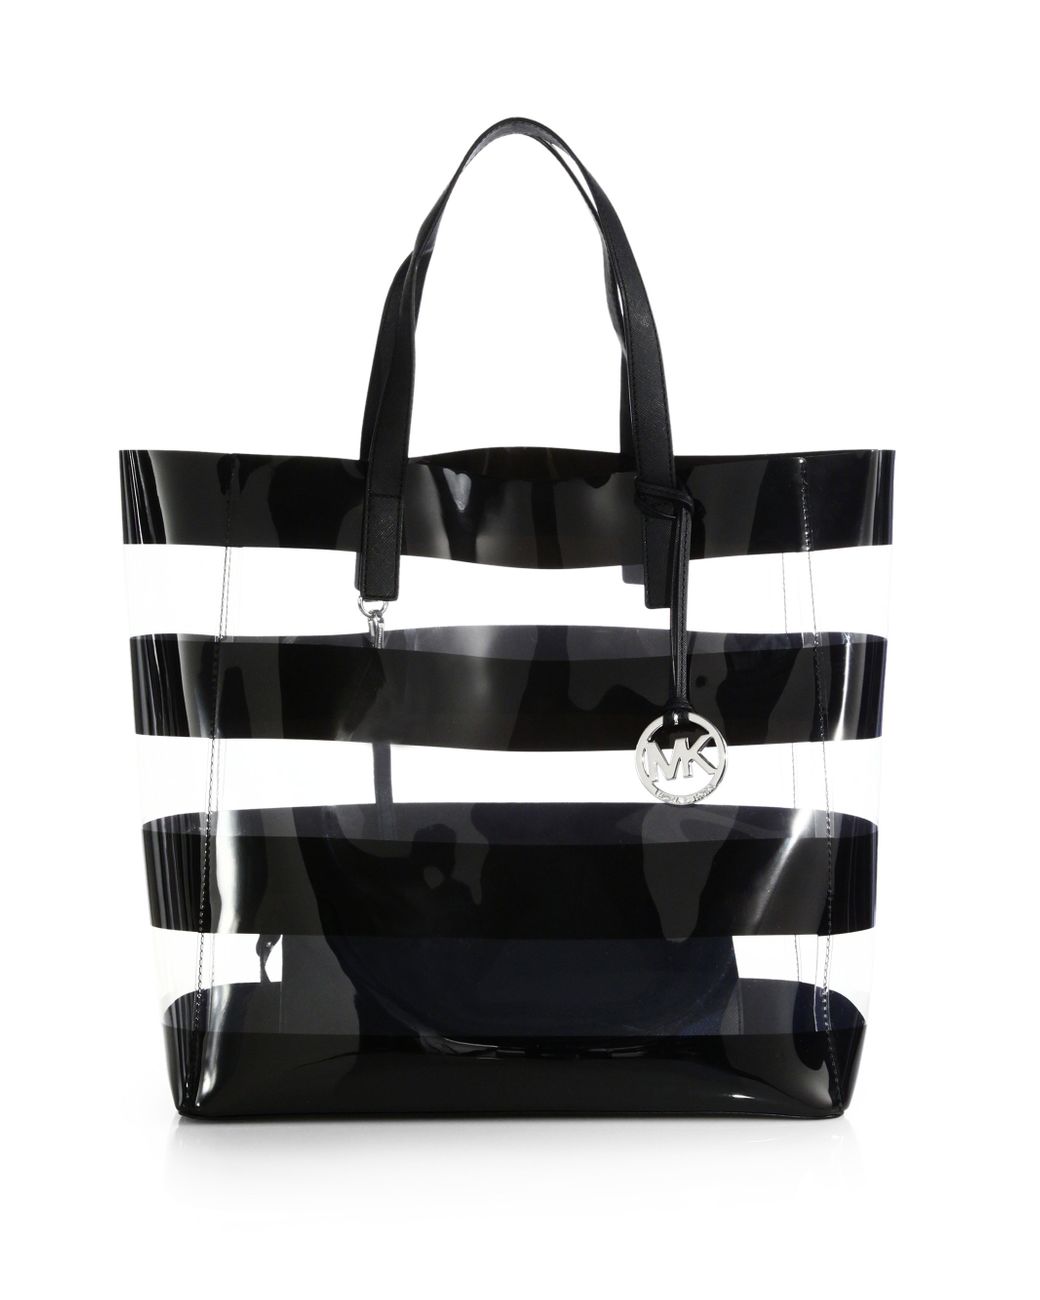 MICHAEL KORS: bag for kids - Black  Michael Kors bag R10190 online at